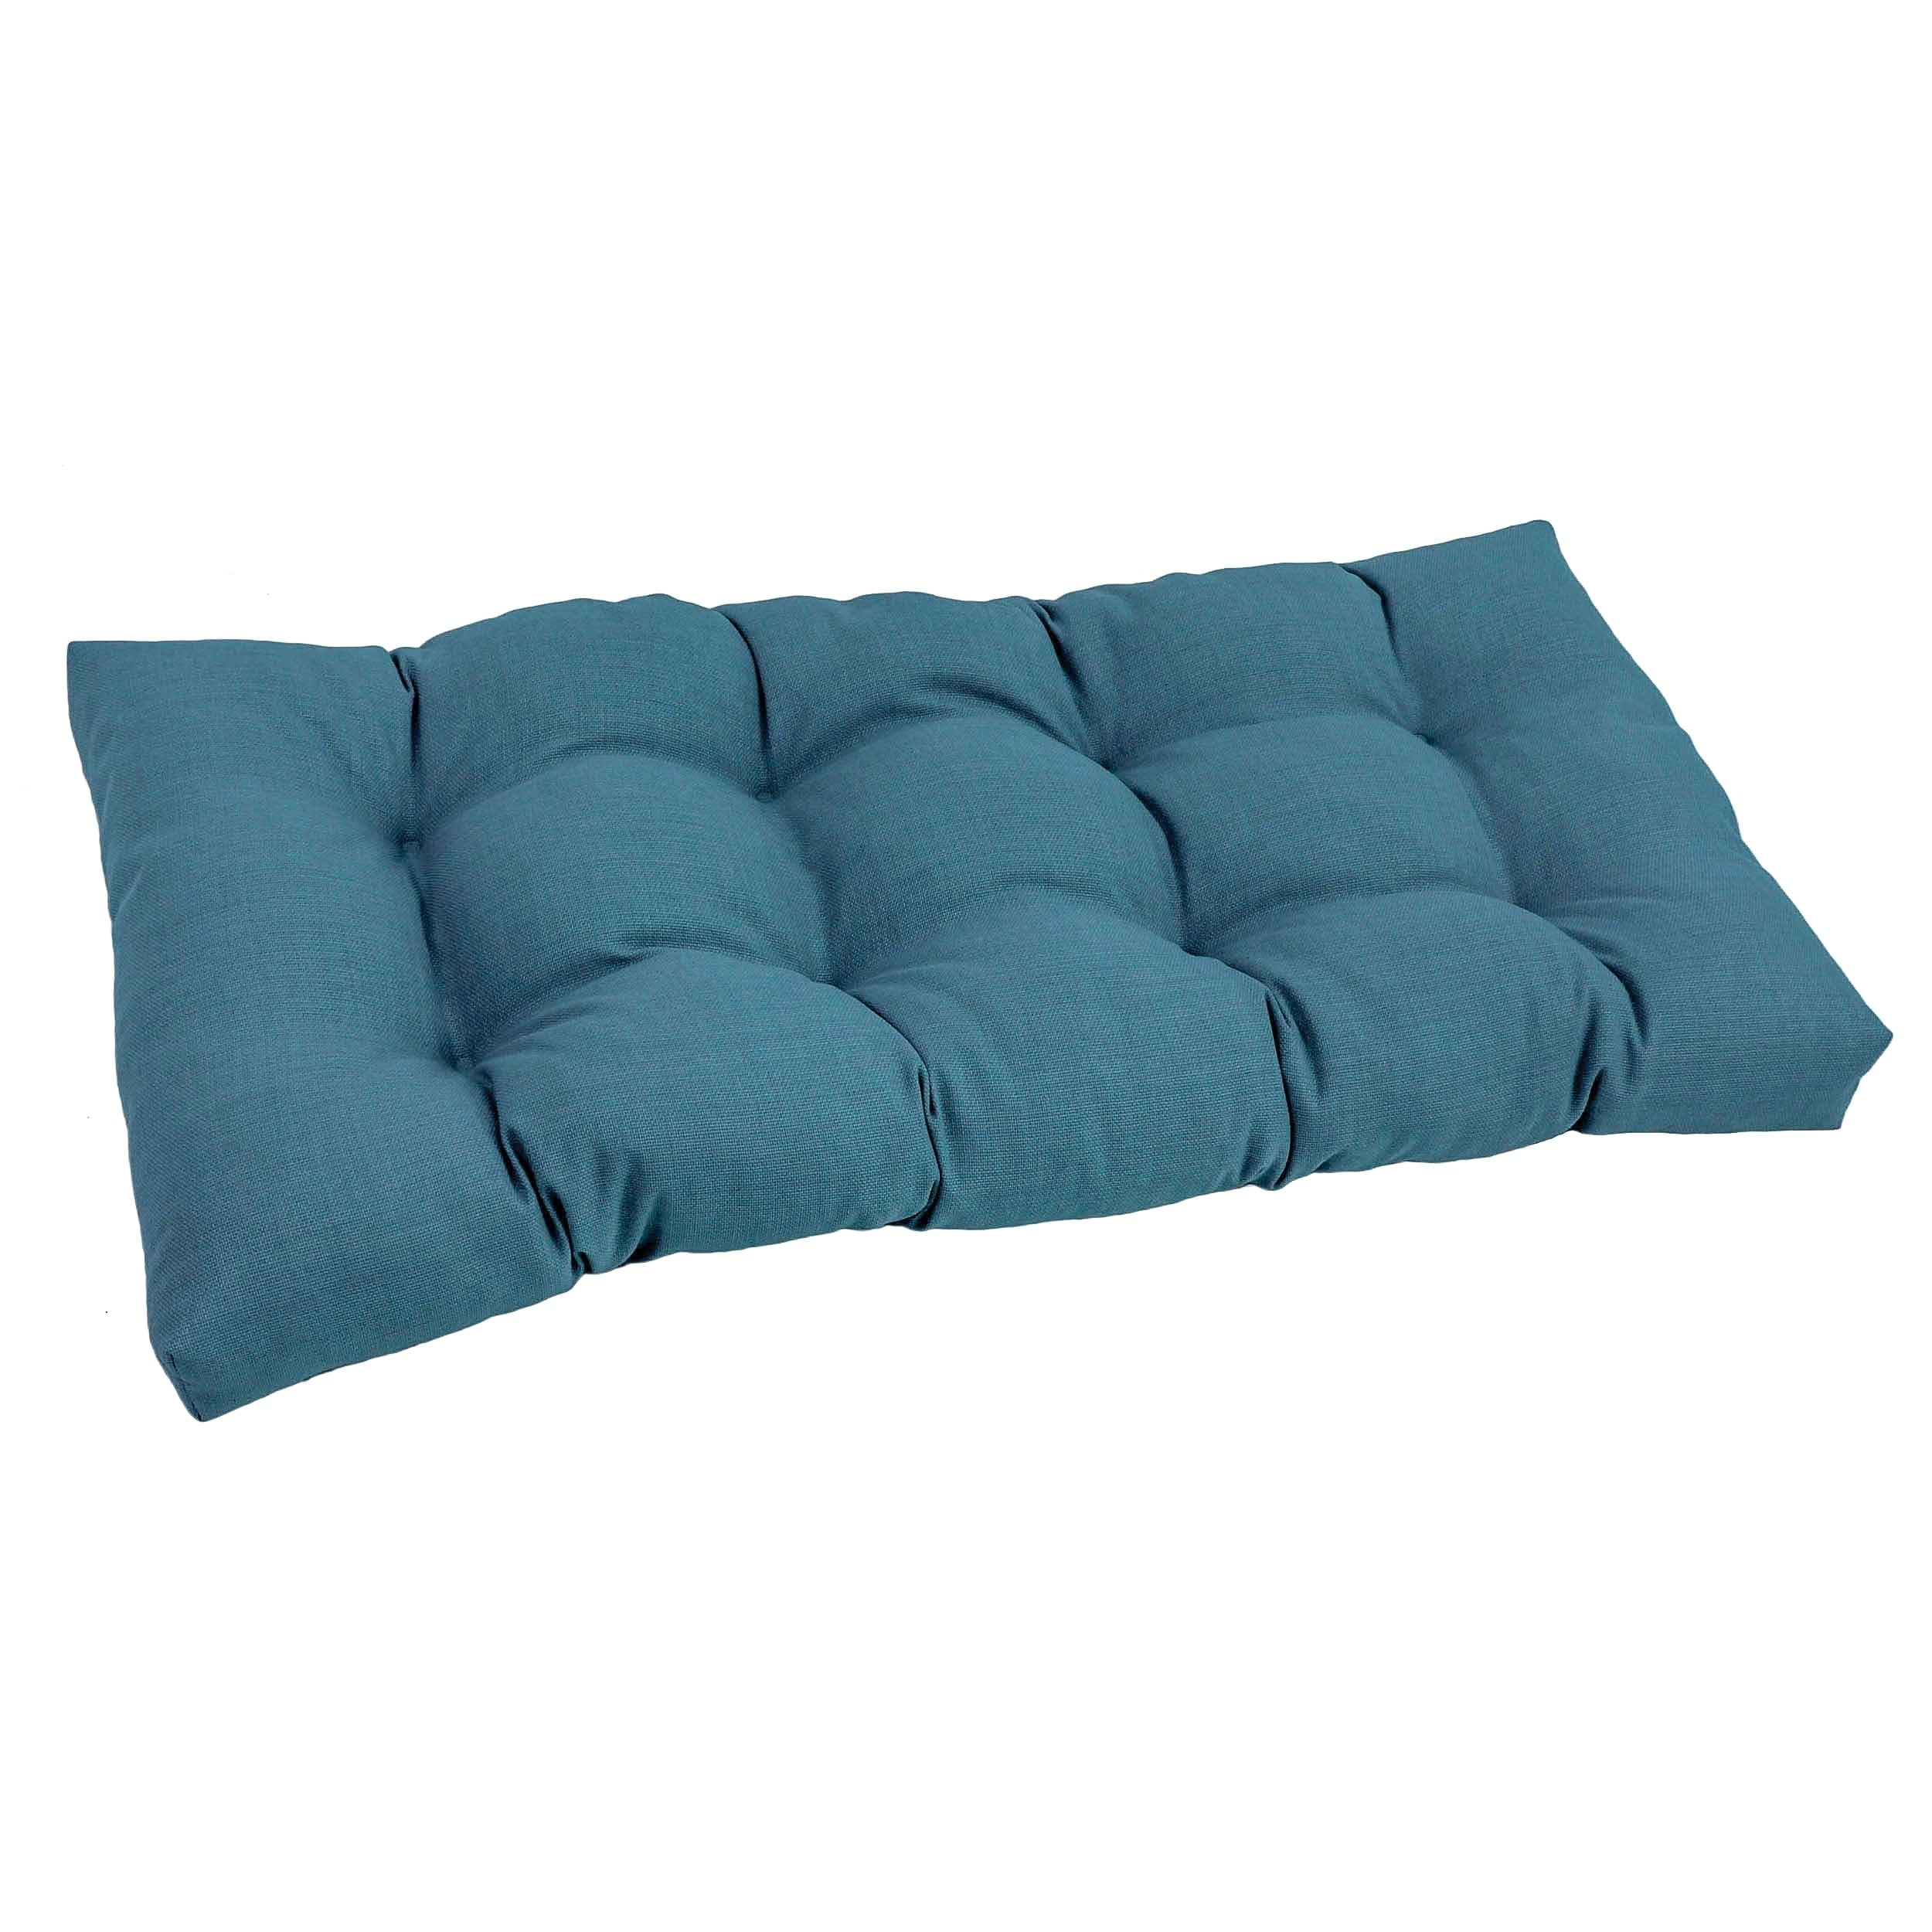 Blazing Needles 42-inch by 19-inch Spun Polyester Loveseat Cushion Luxury Azure